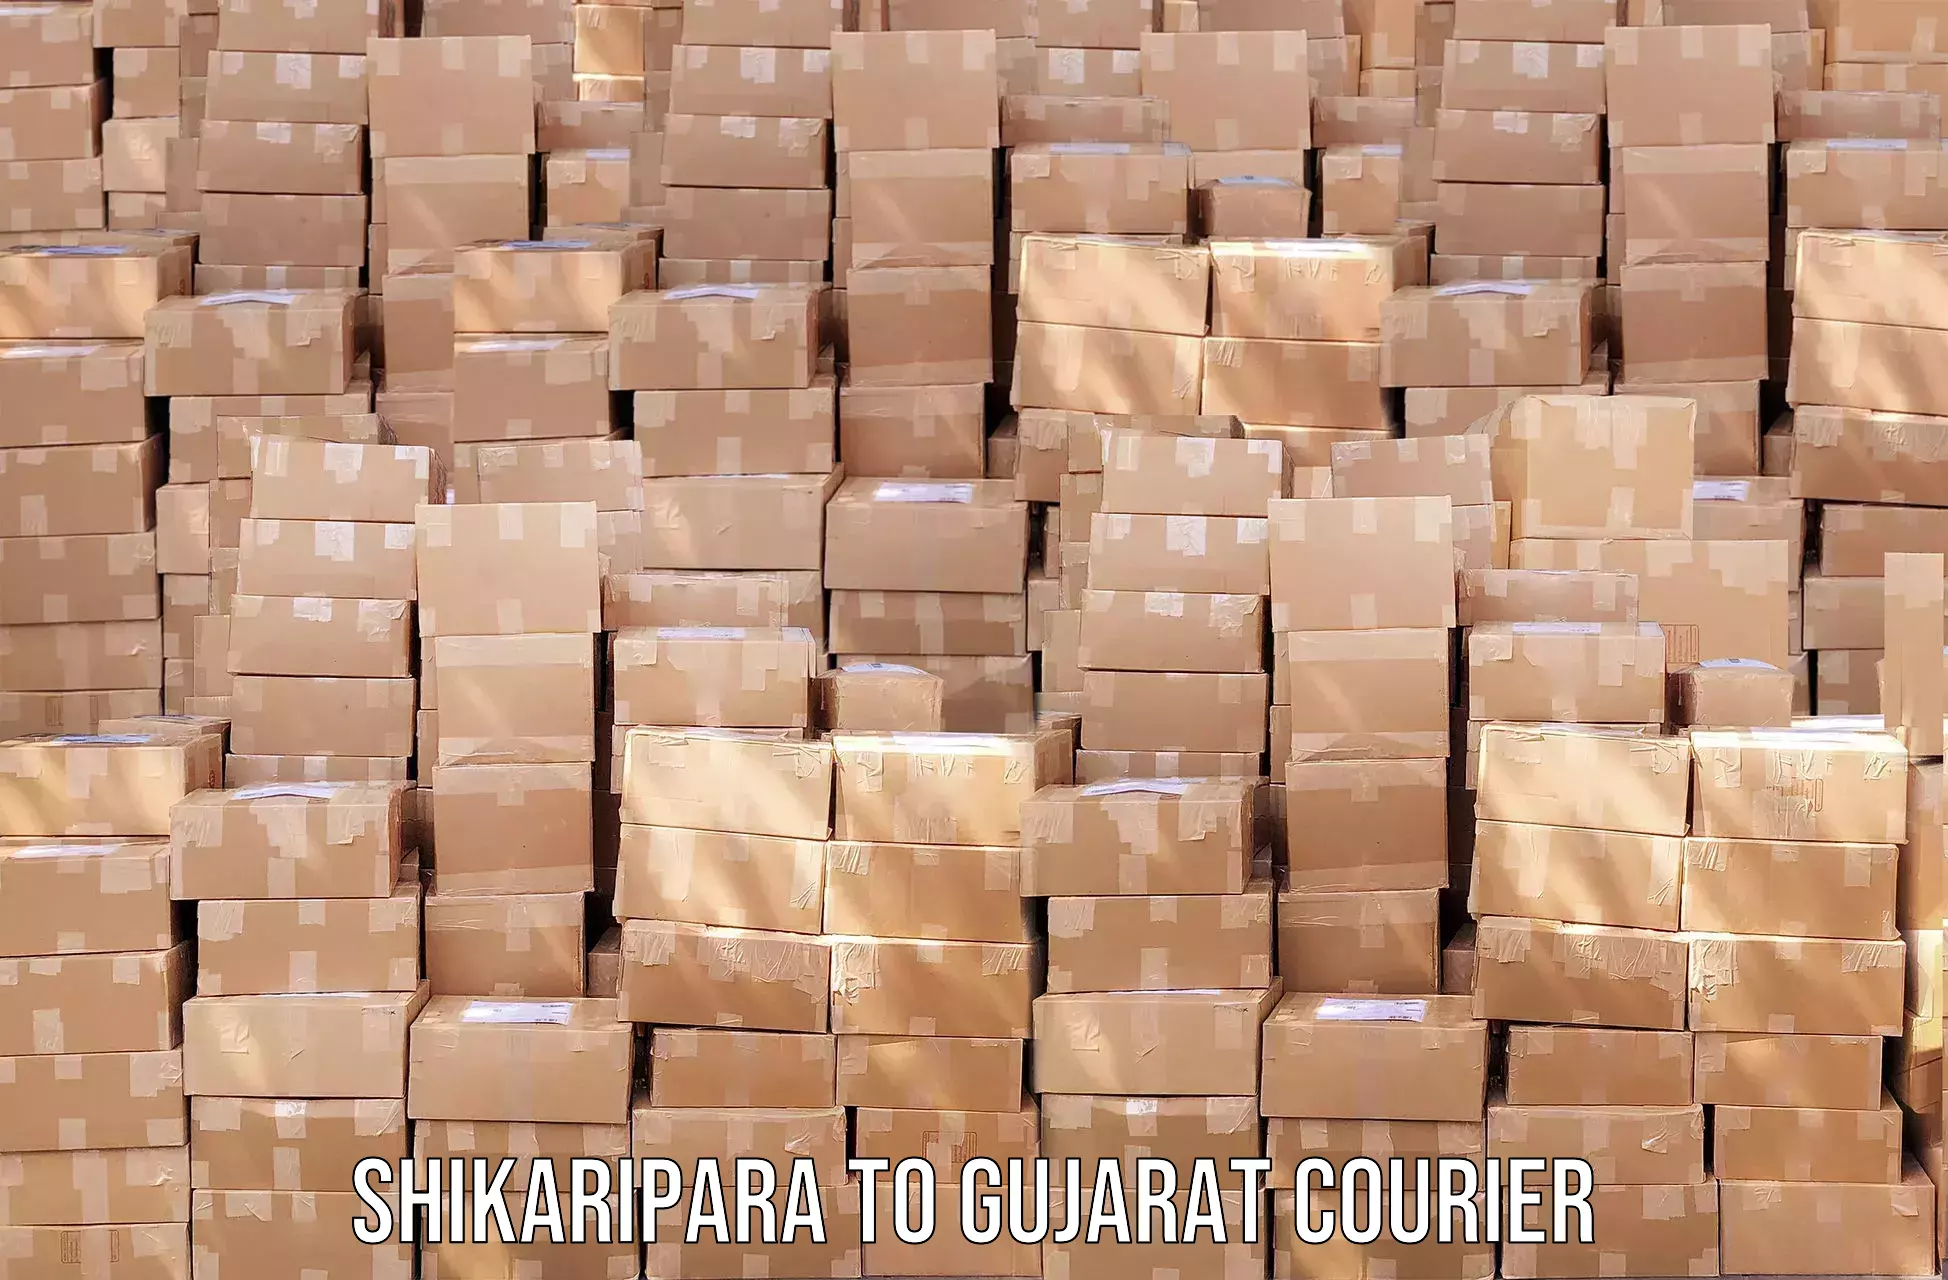 Speedy delivery service Shikaripara to Gujarat